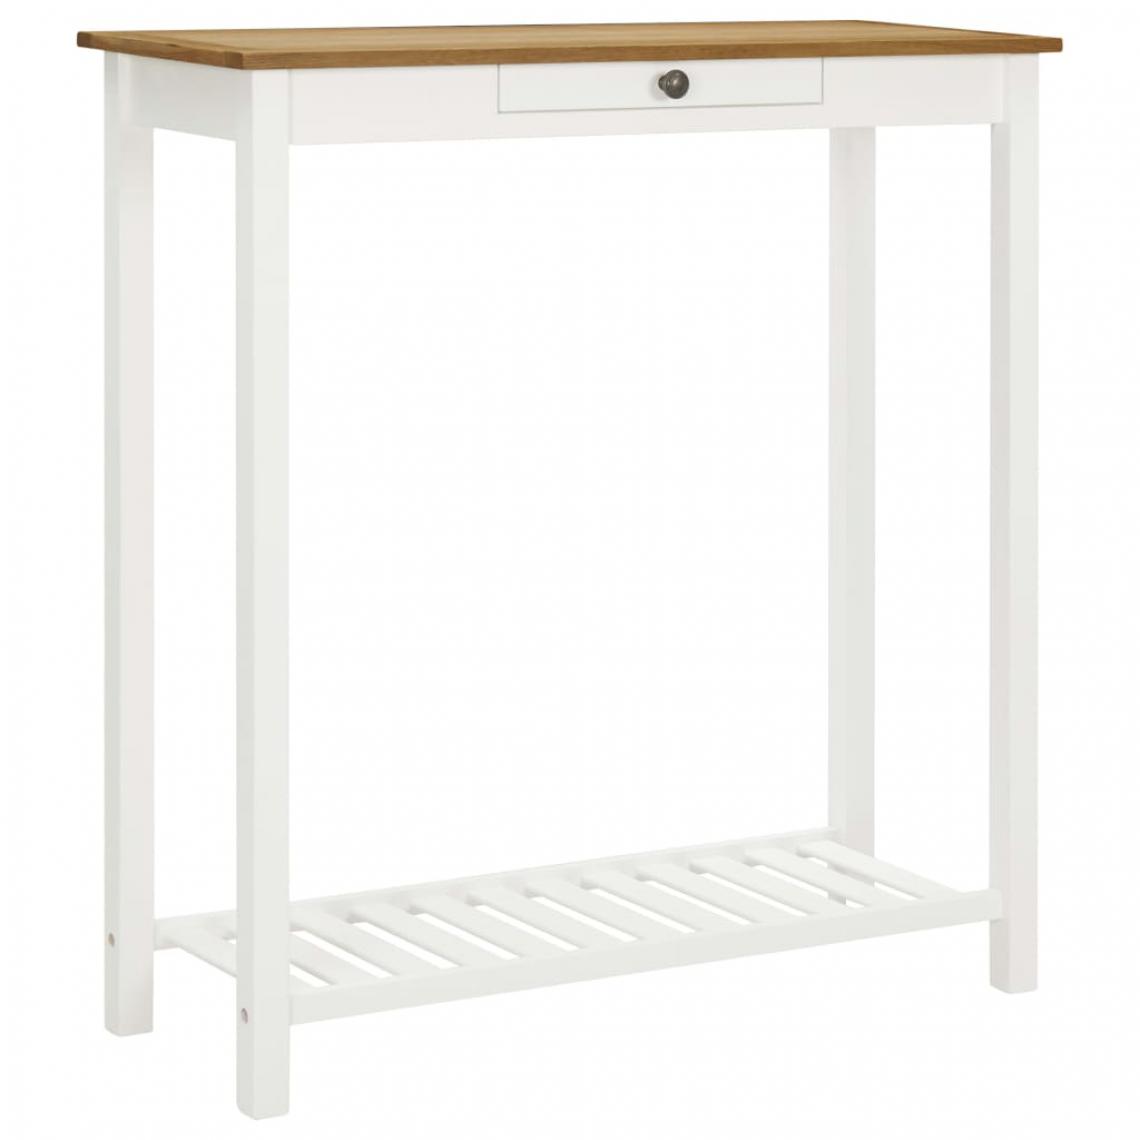 Icaverne - Moderne Tables reference Koweït Table de bar 100x40x110 cm Bois de chêne solide - Tables à manger